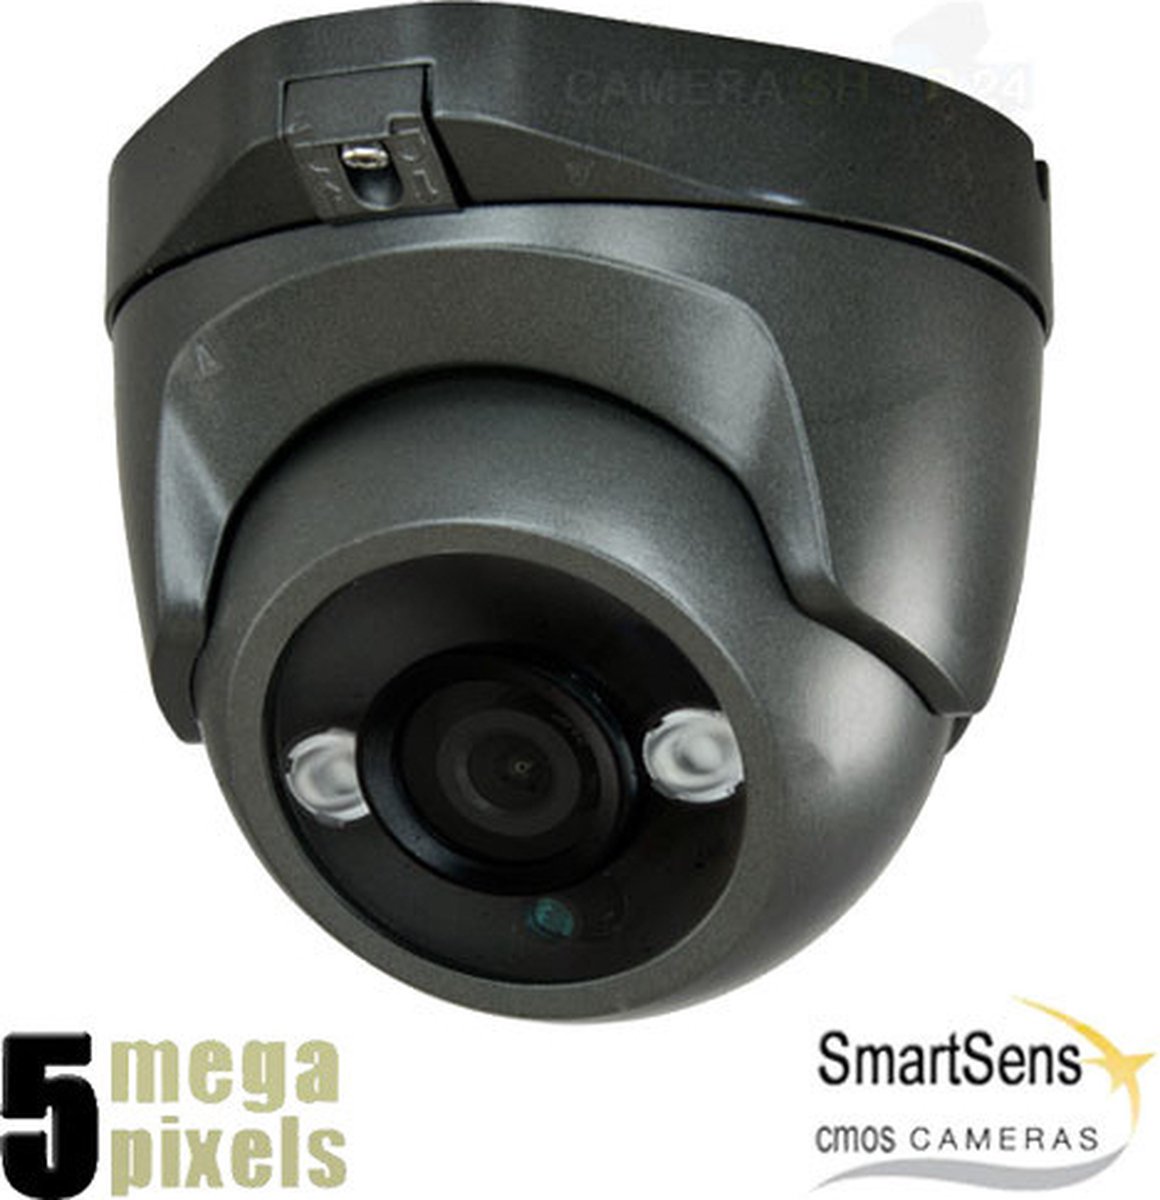 Beveiligingscamera - 4 in 1 Dome Camera - 5 Megapixel - Nachtzicht 30m - CVI, TVI, AHD, CVBS - Array Leds - Binnen & Buiten